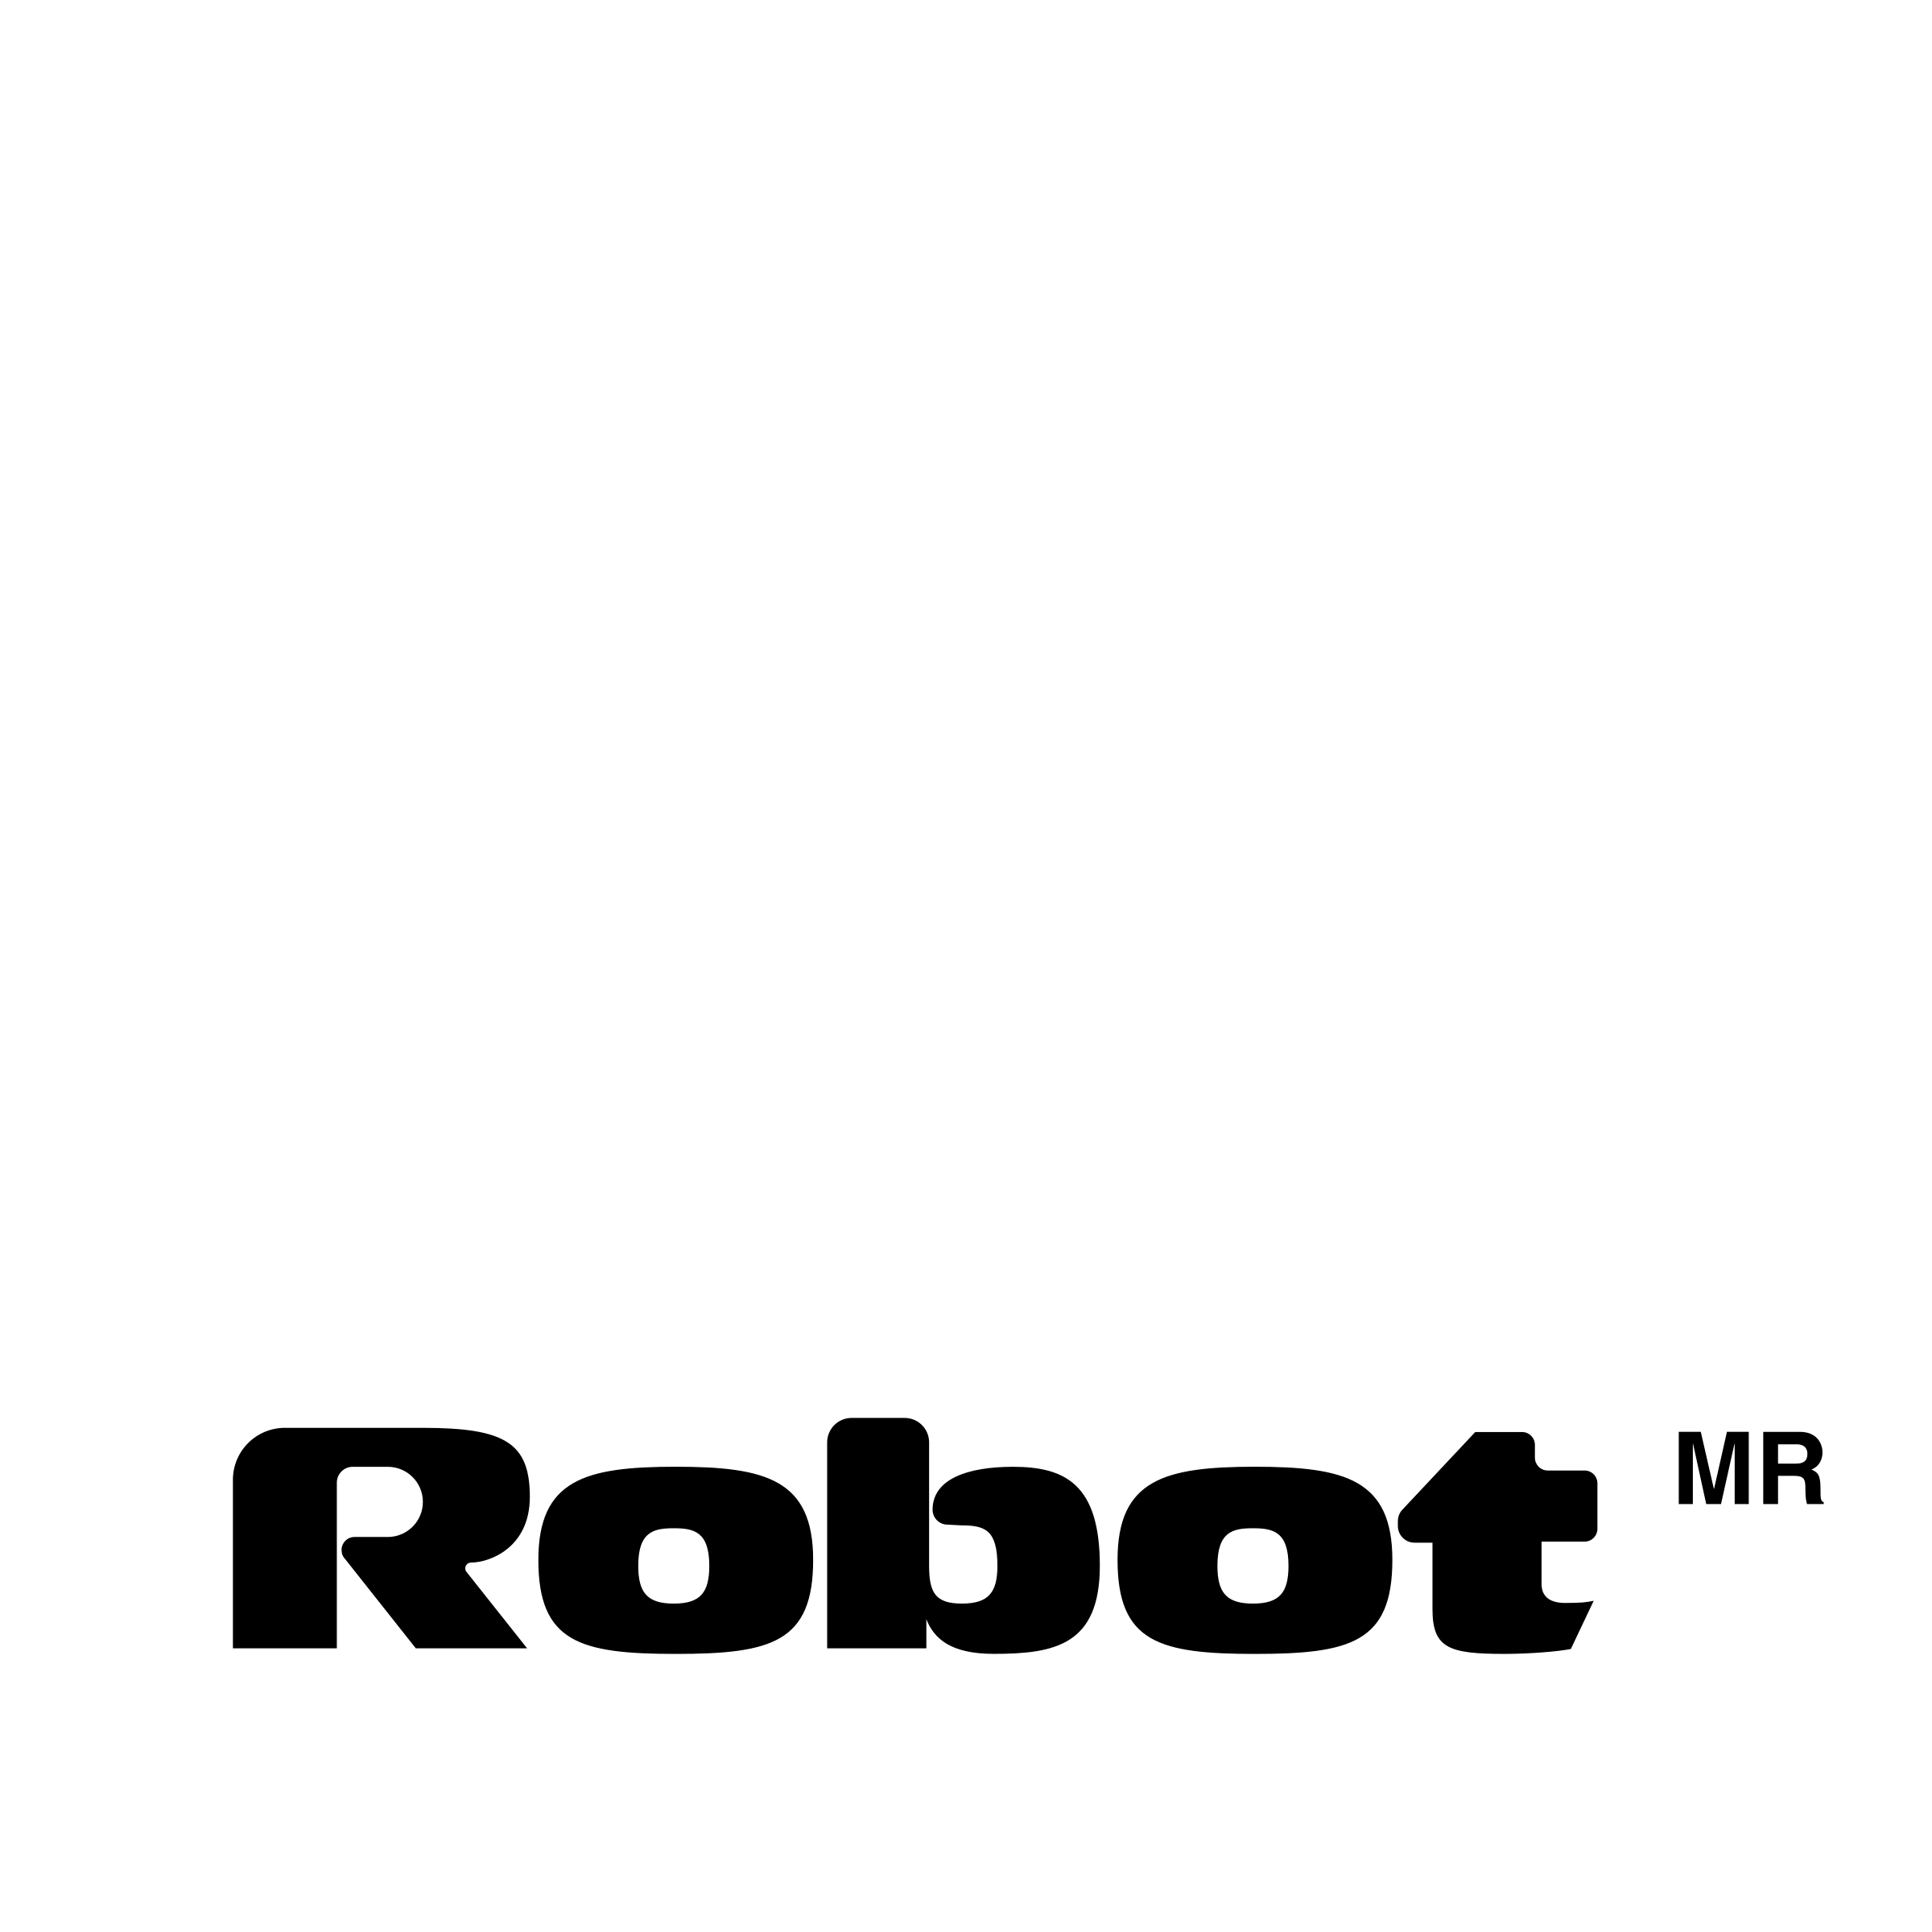 White Robot Logo - Robot Logo PNG Transparent & SVG Vector - Freebie Supply